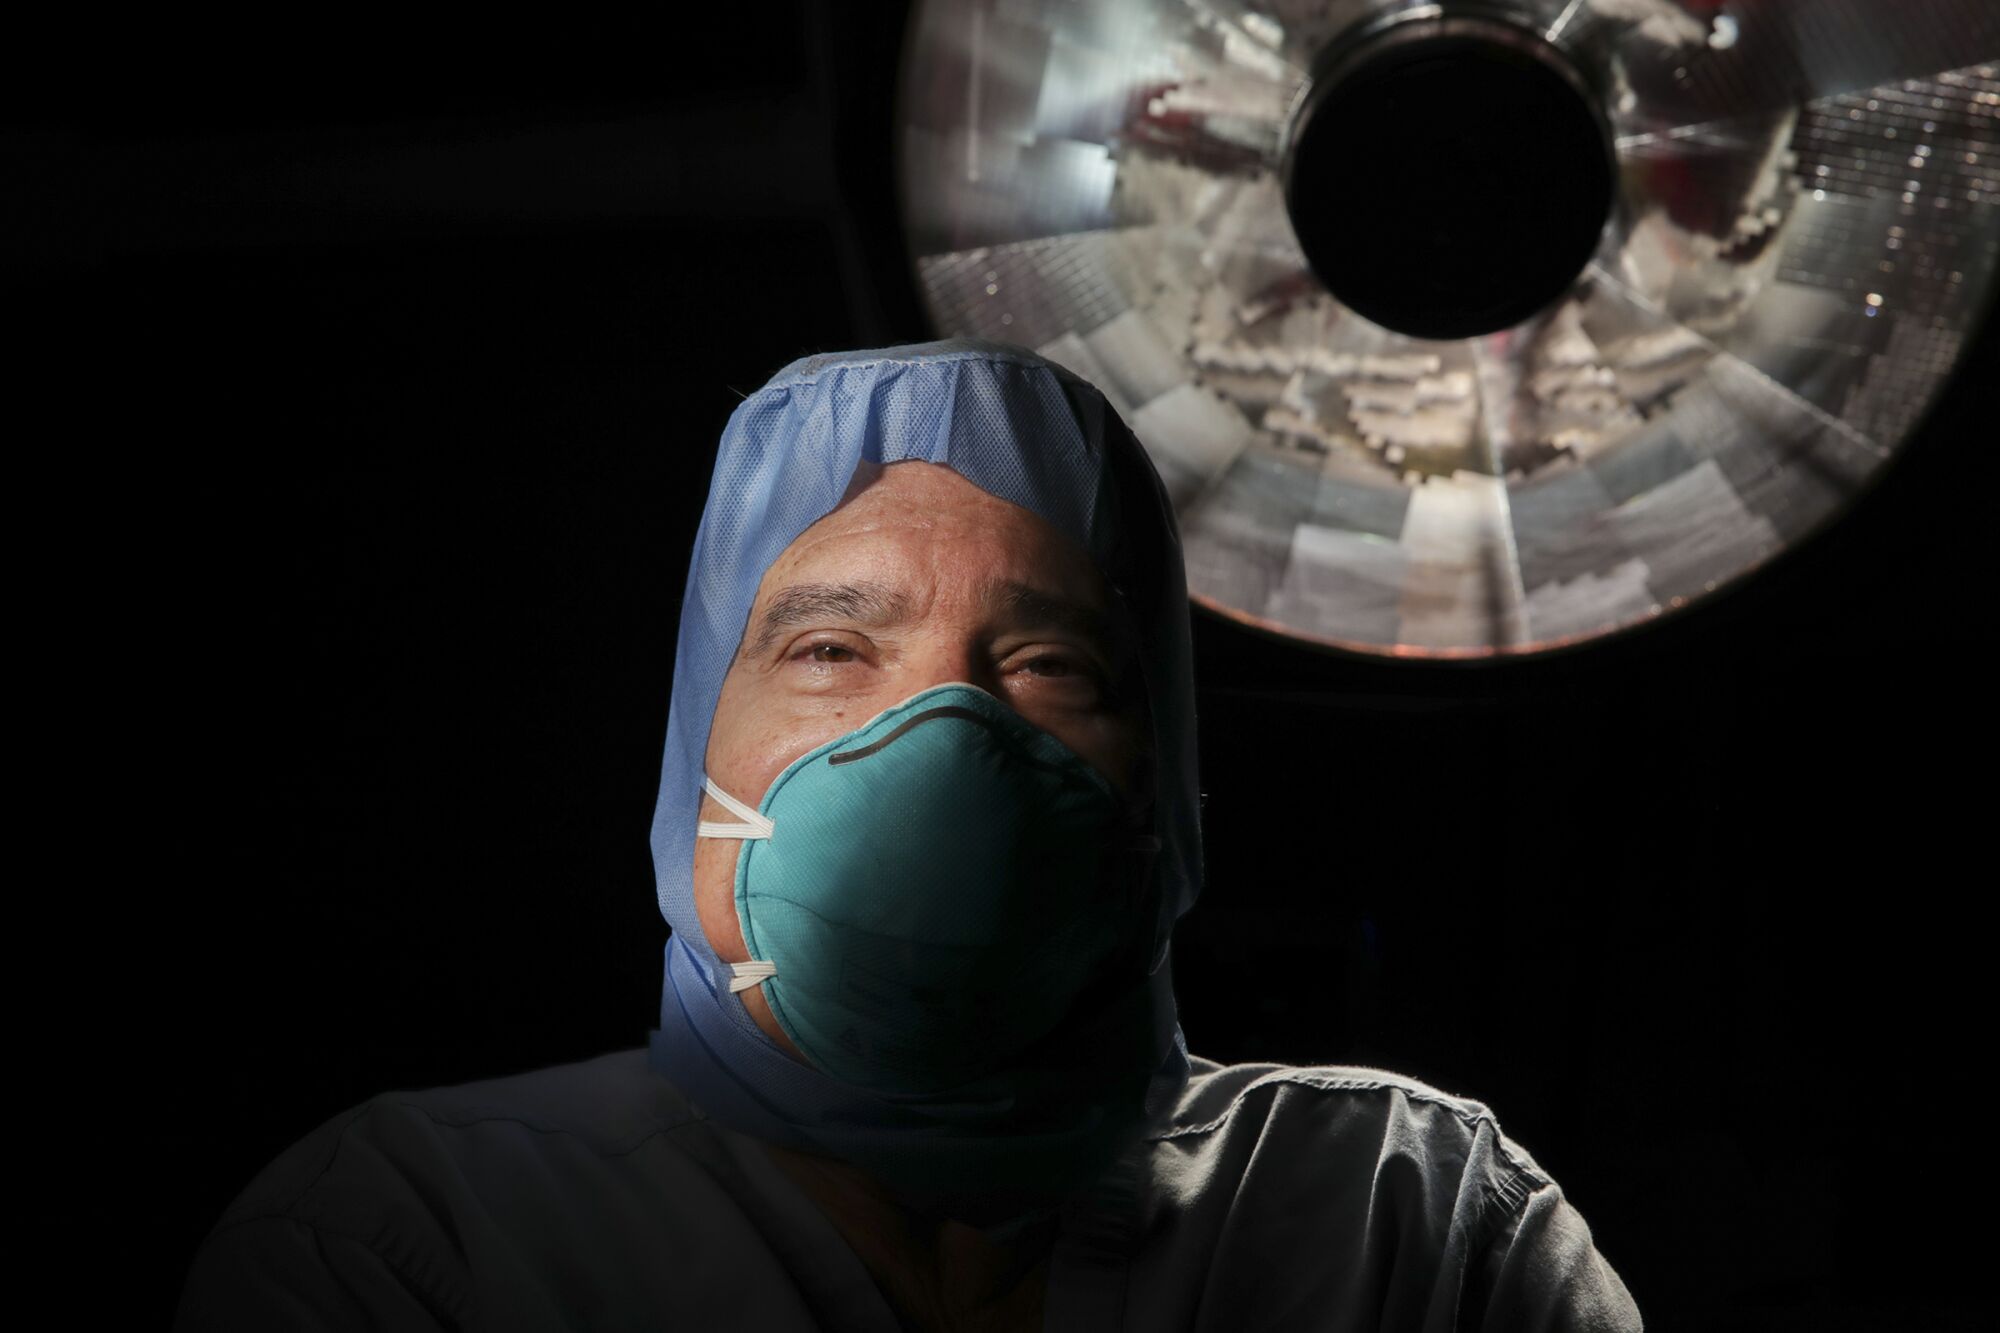 A surgeon wearing a face masks and scrubs, seen from below